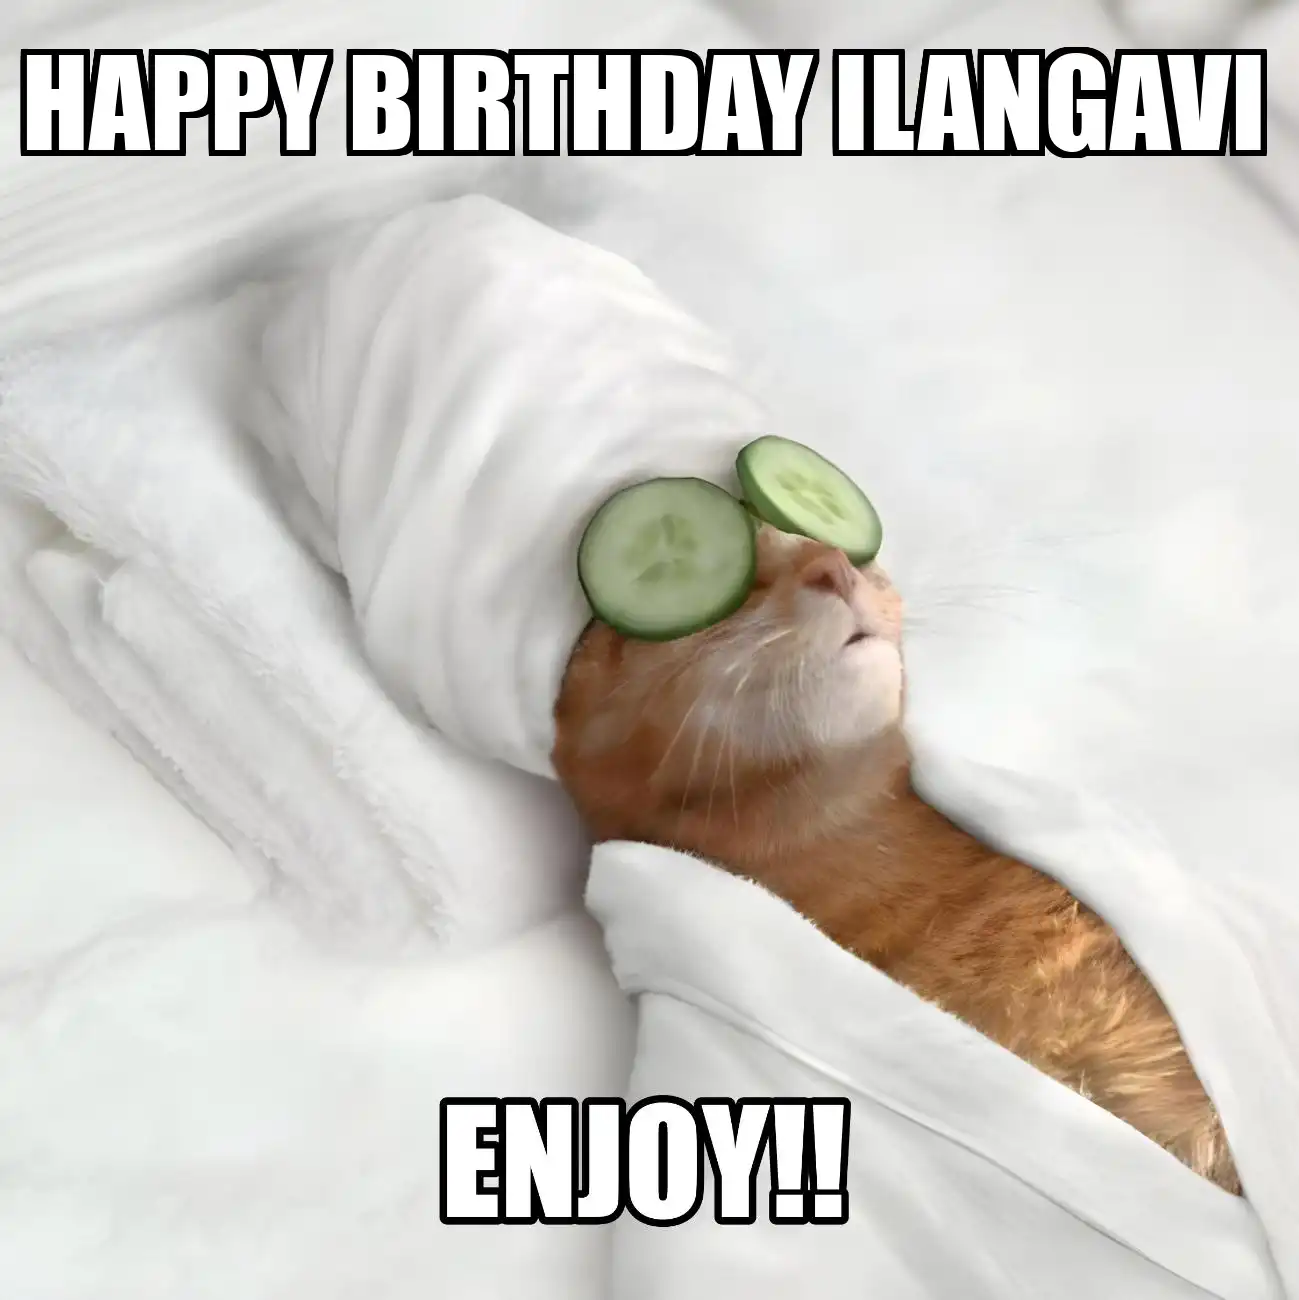 Happy Birthday Ilangavi Enjoy Cat Meme